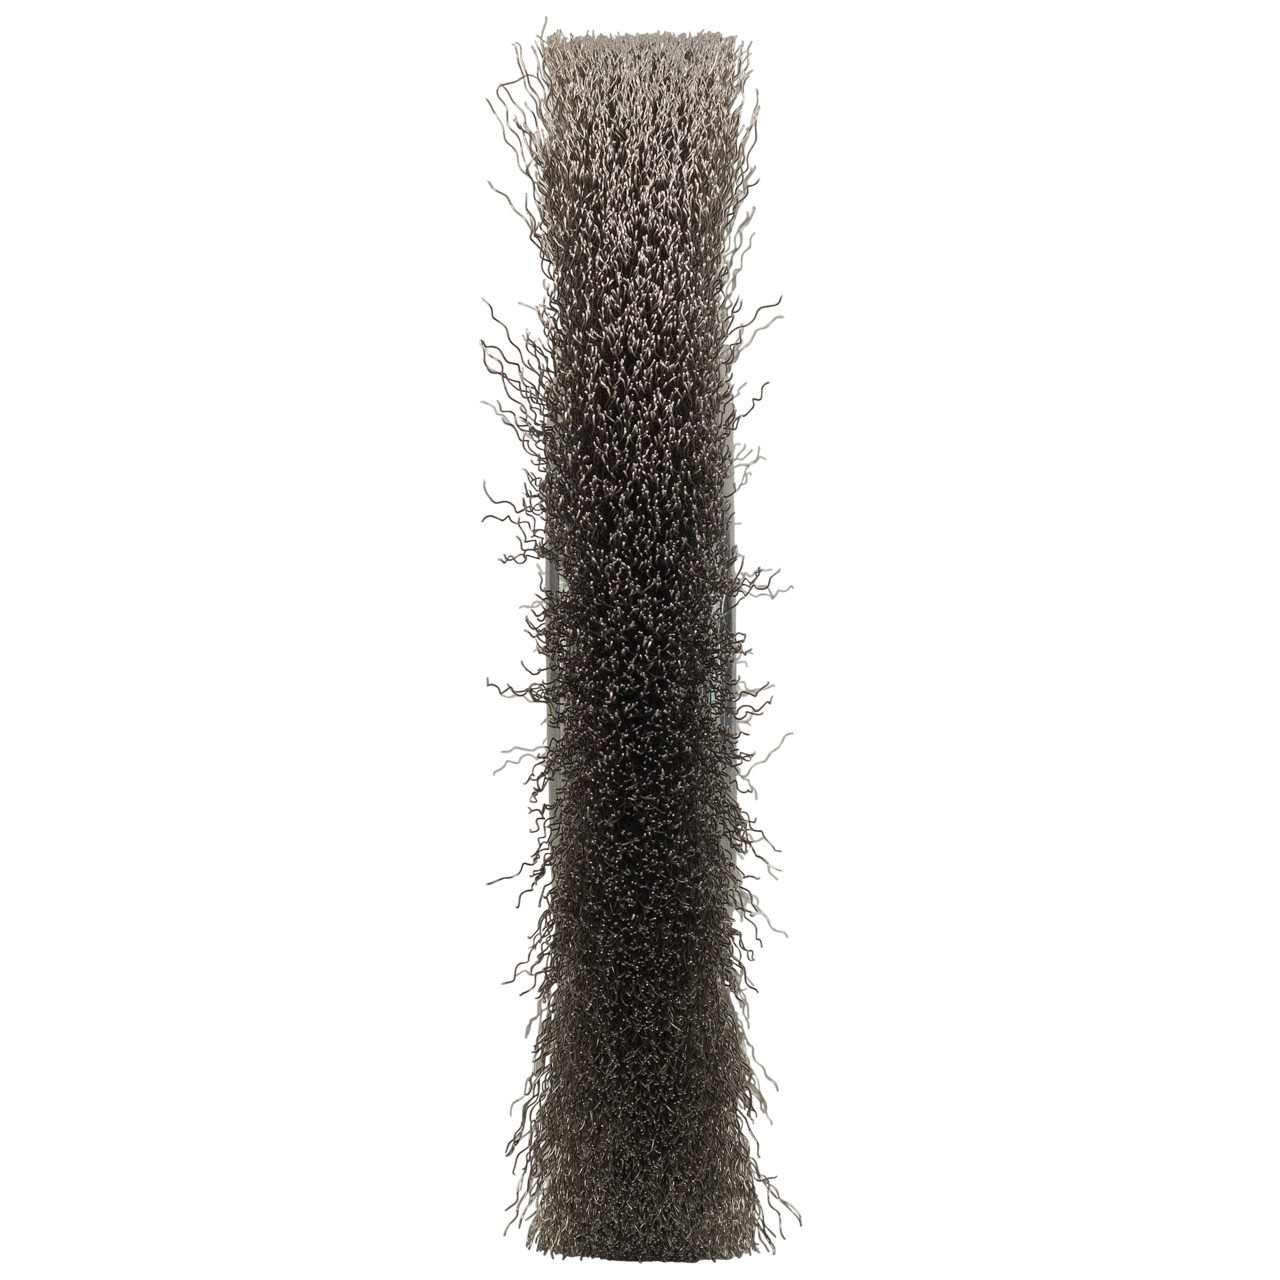 Spazzole rotonde Tyrolit DxLxH 180x22x42x32 Per acciaio inox, forma: 1RDW - (spazzole rotonde), Art. 128345